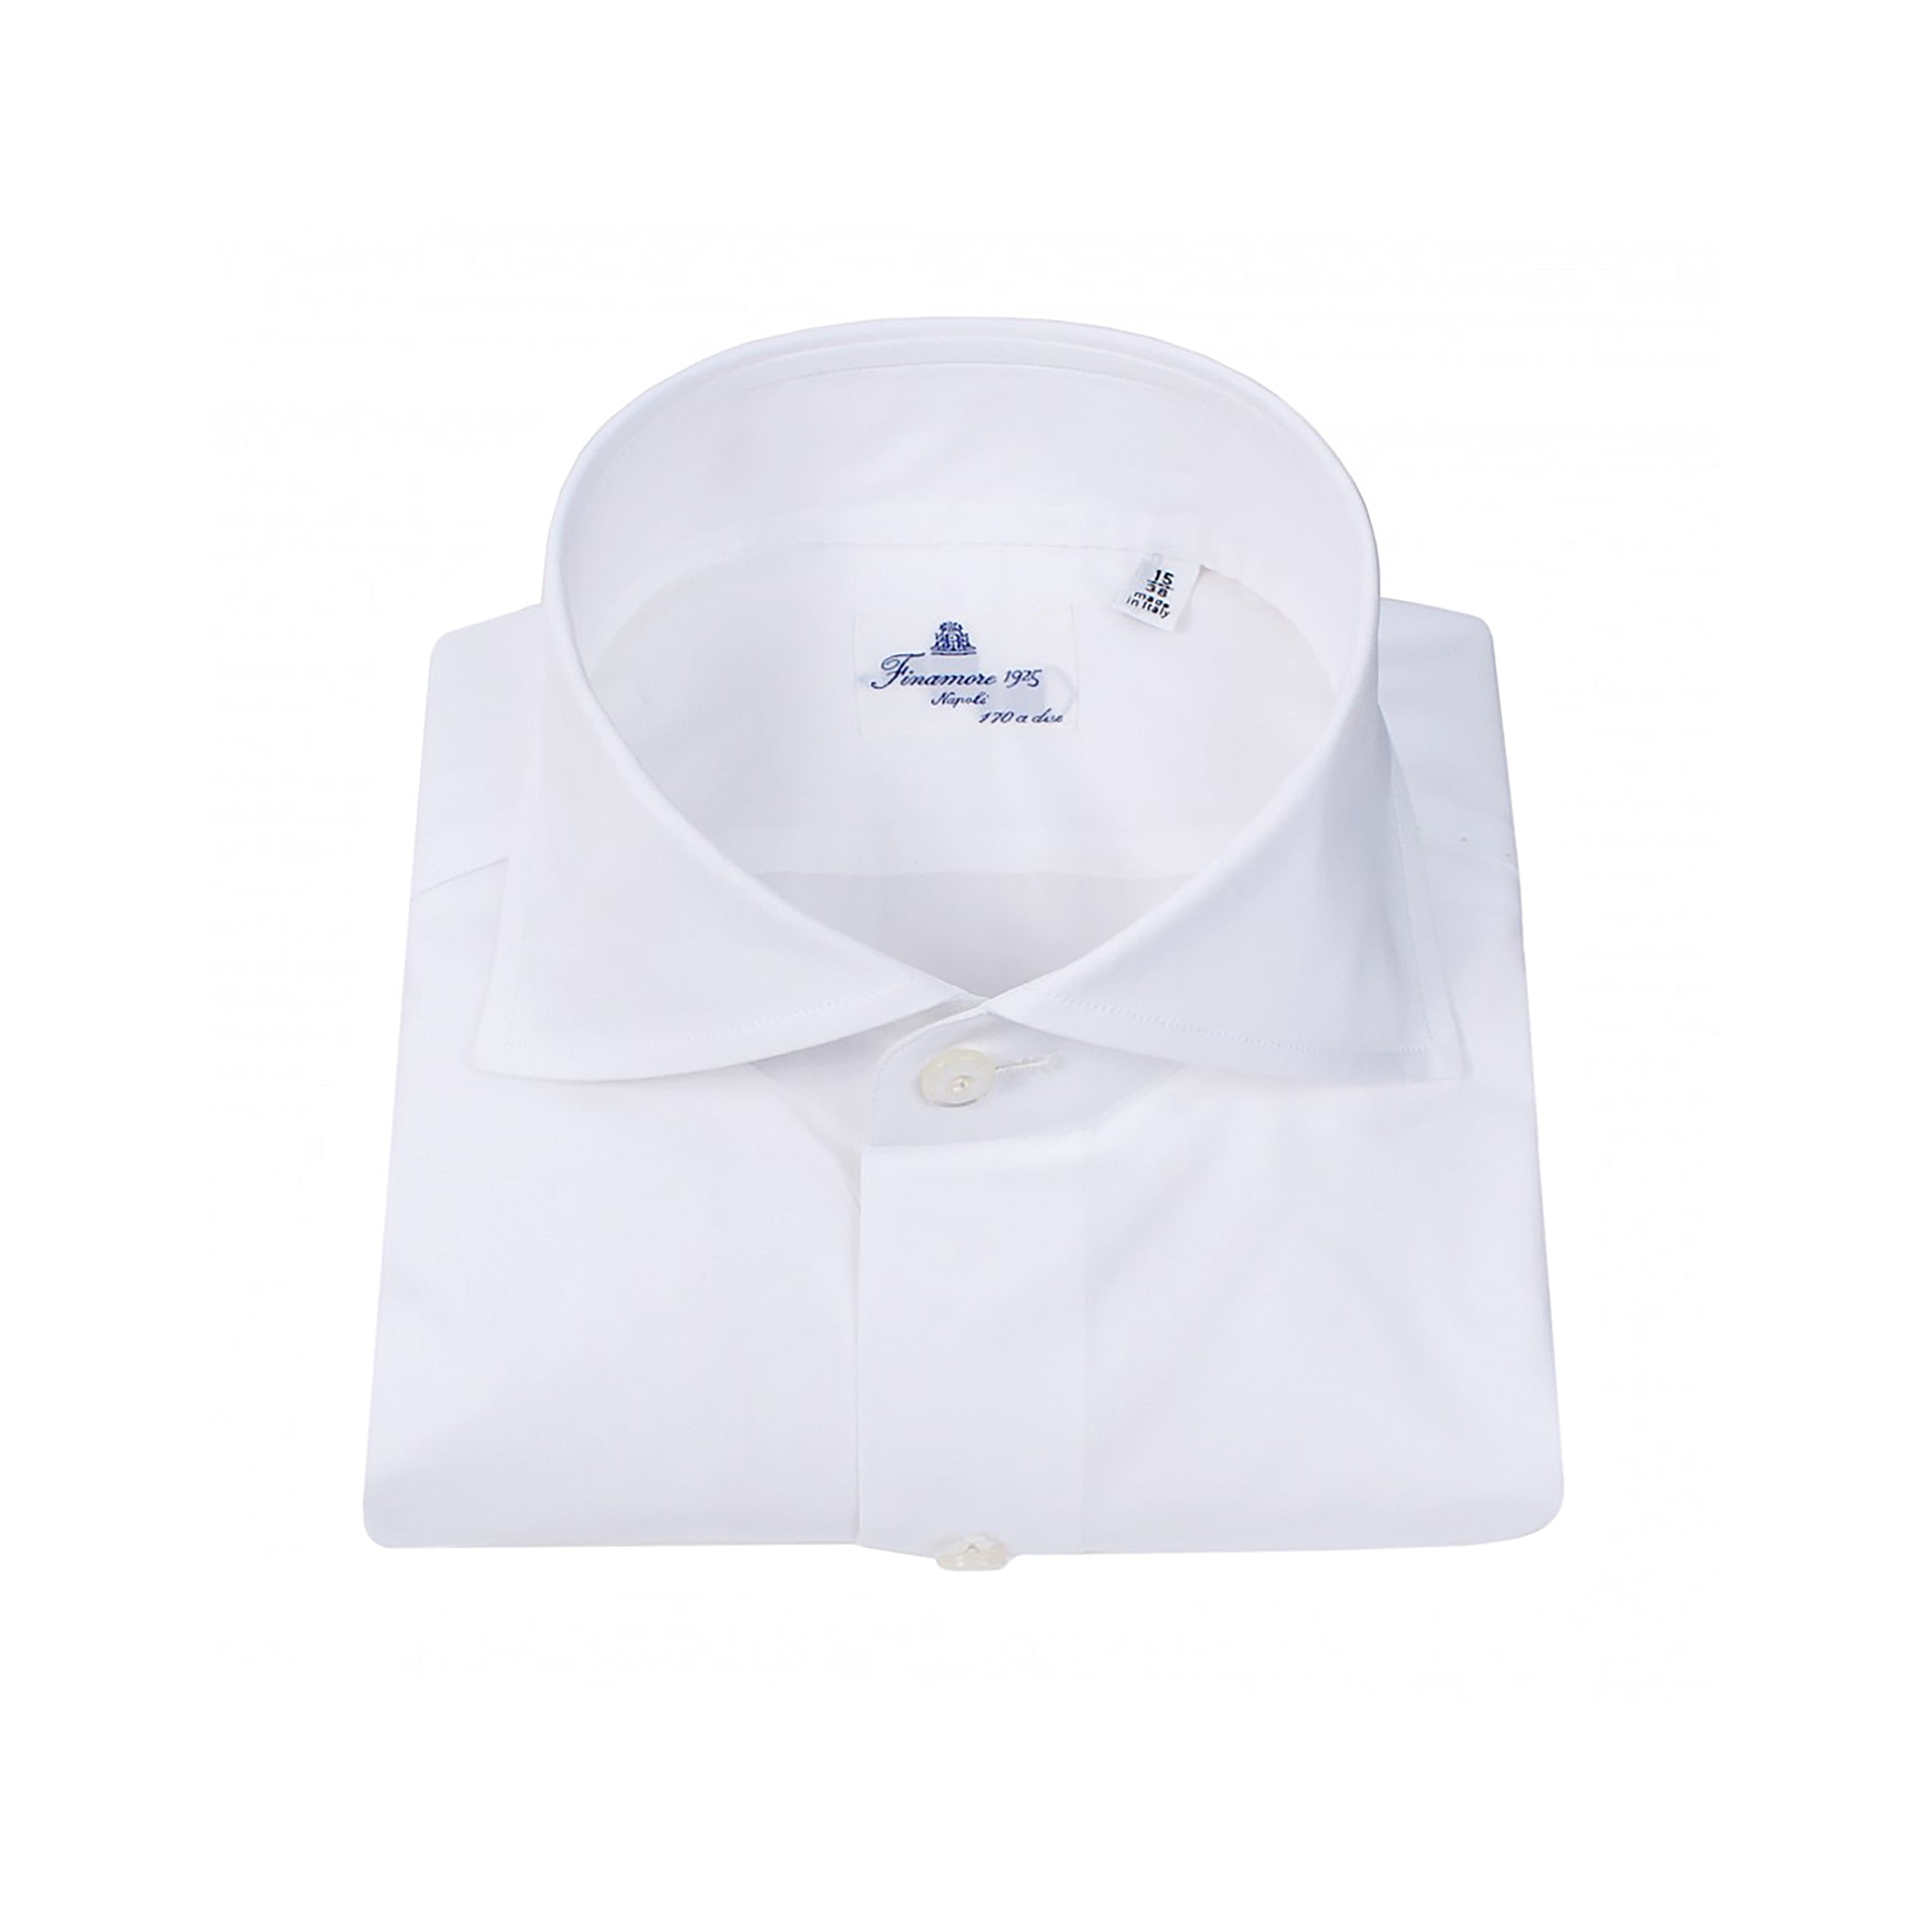 Dress shirt Napoli 170 a due classic collar Light blue or white